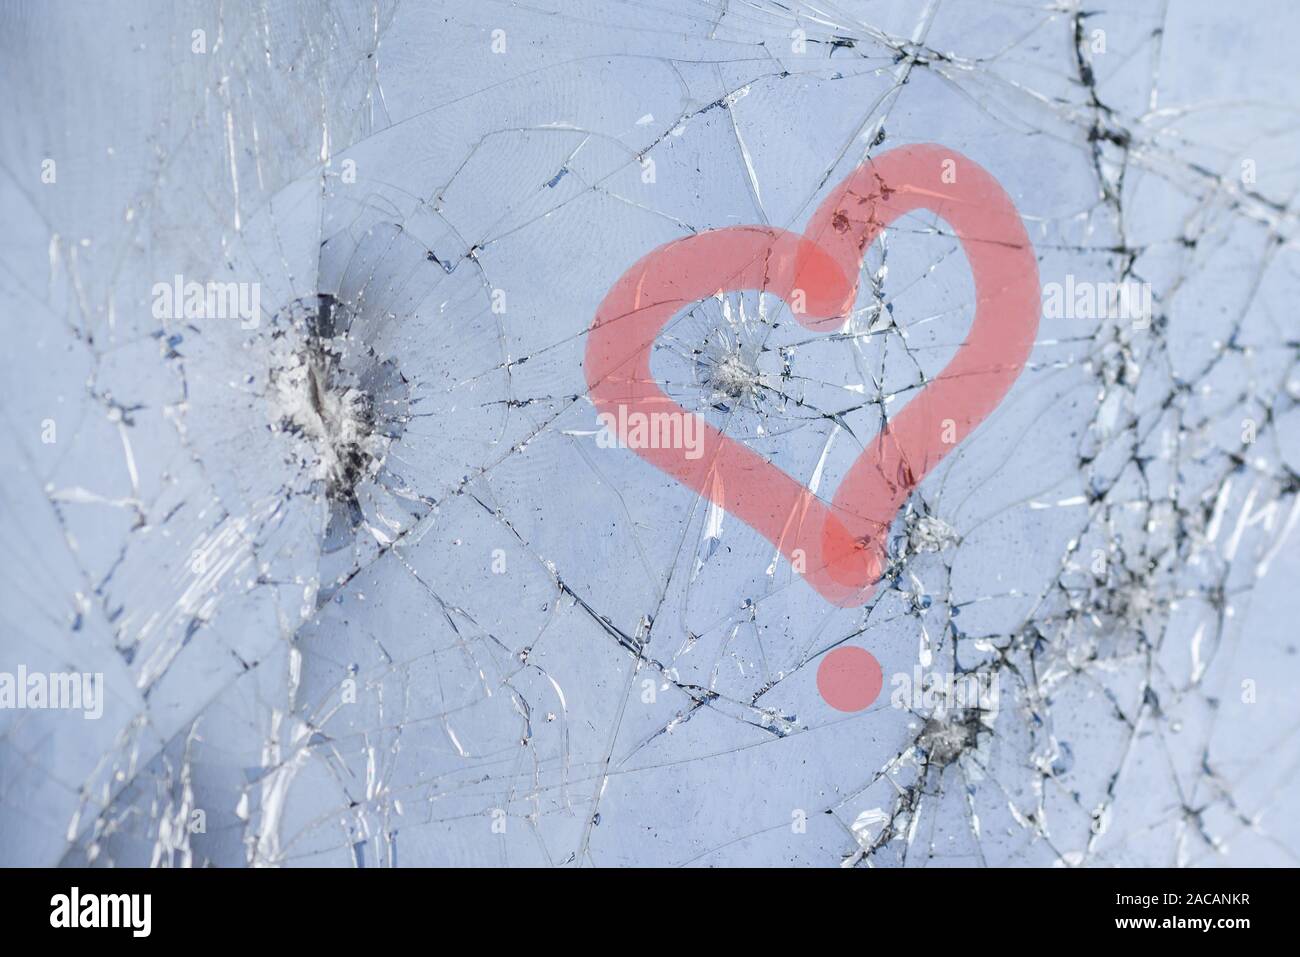 Broken glass heart Stock Photo by ©zimmytws 58734985